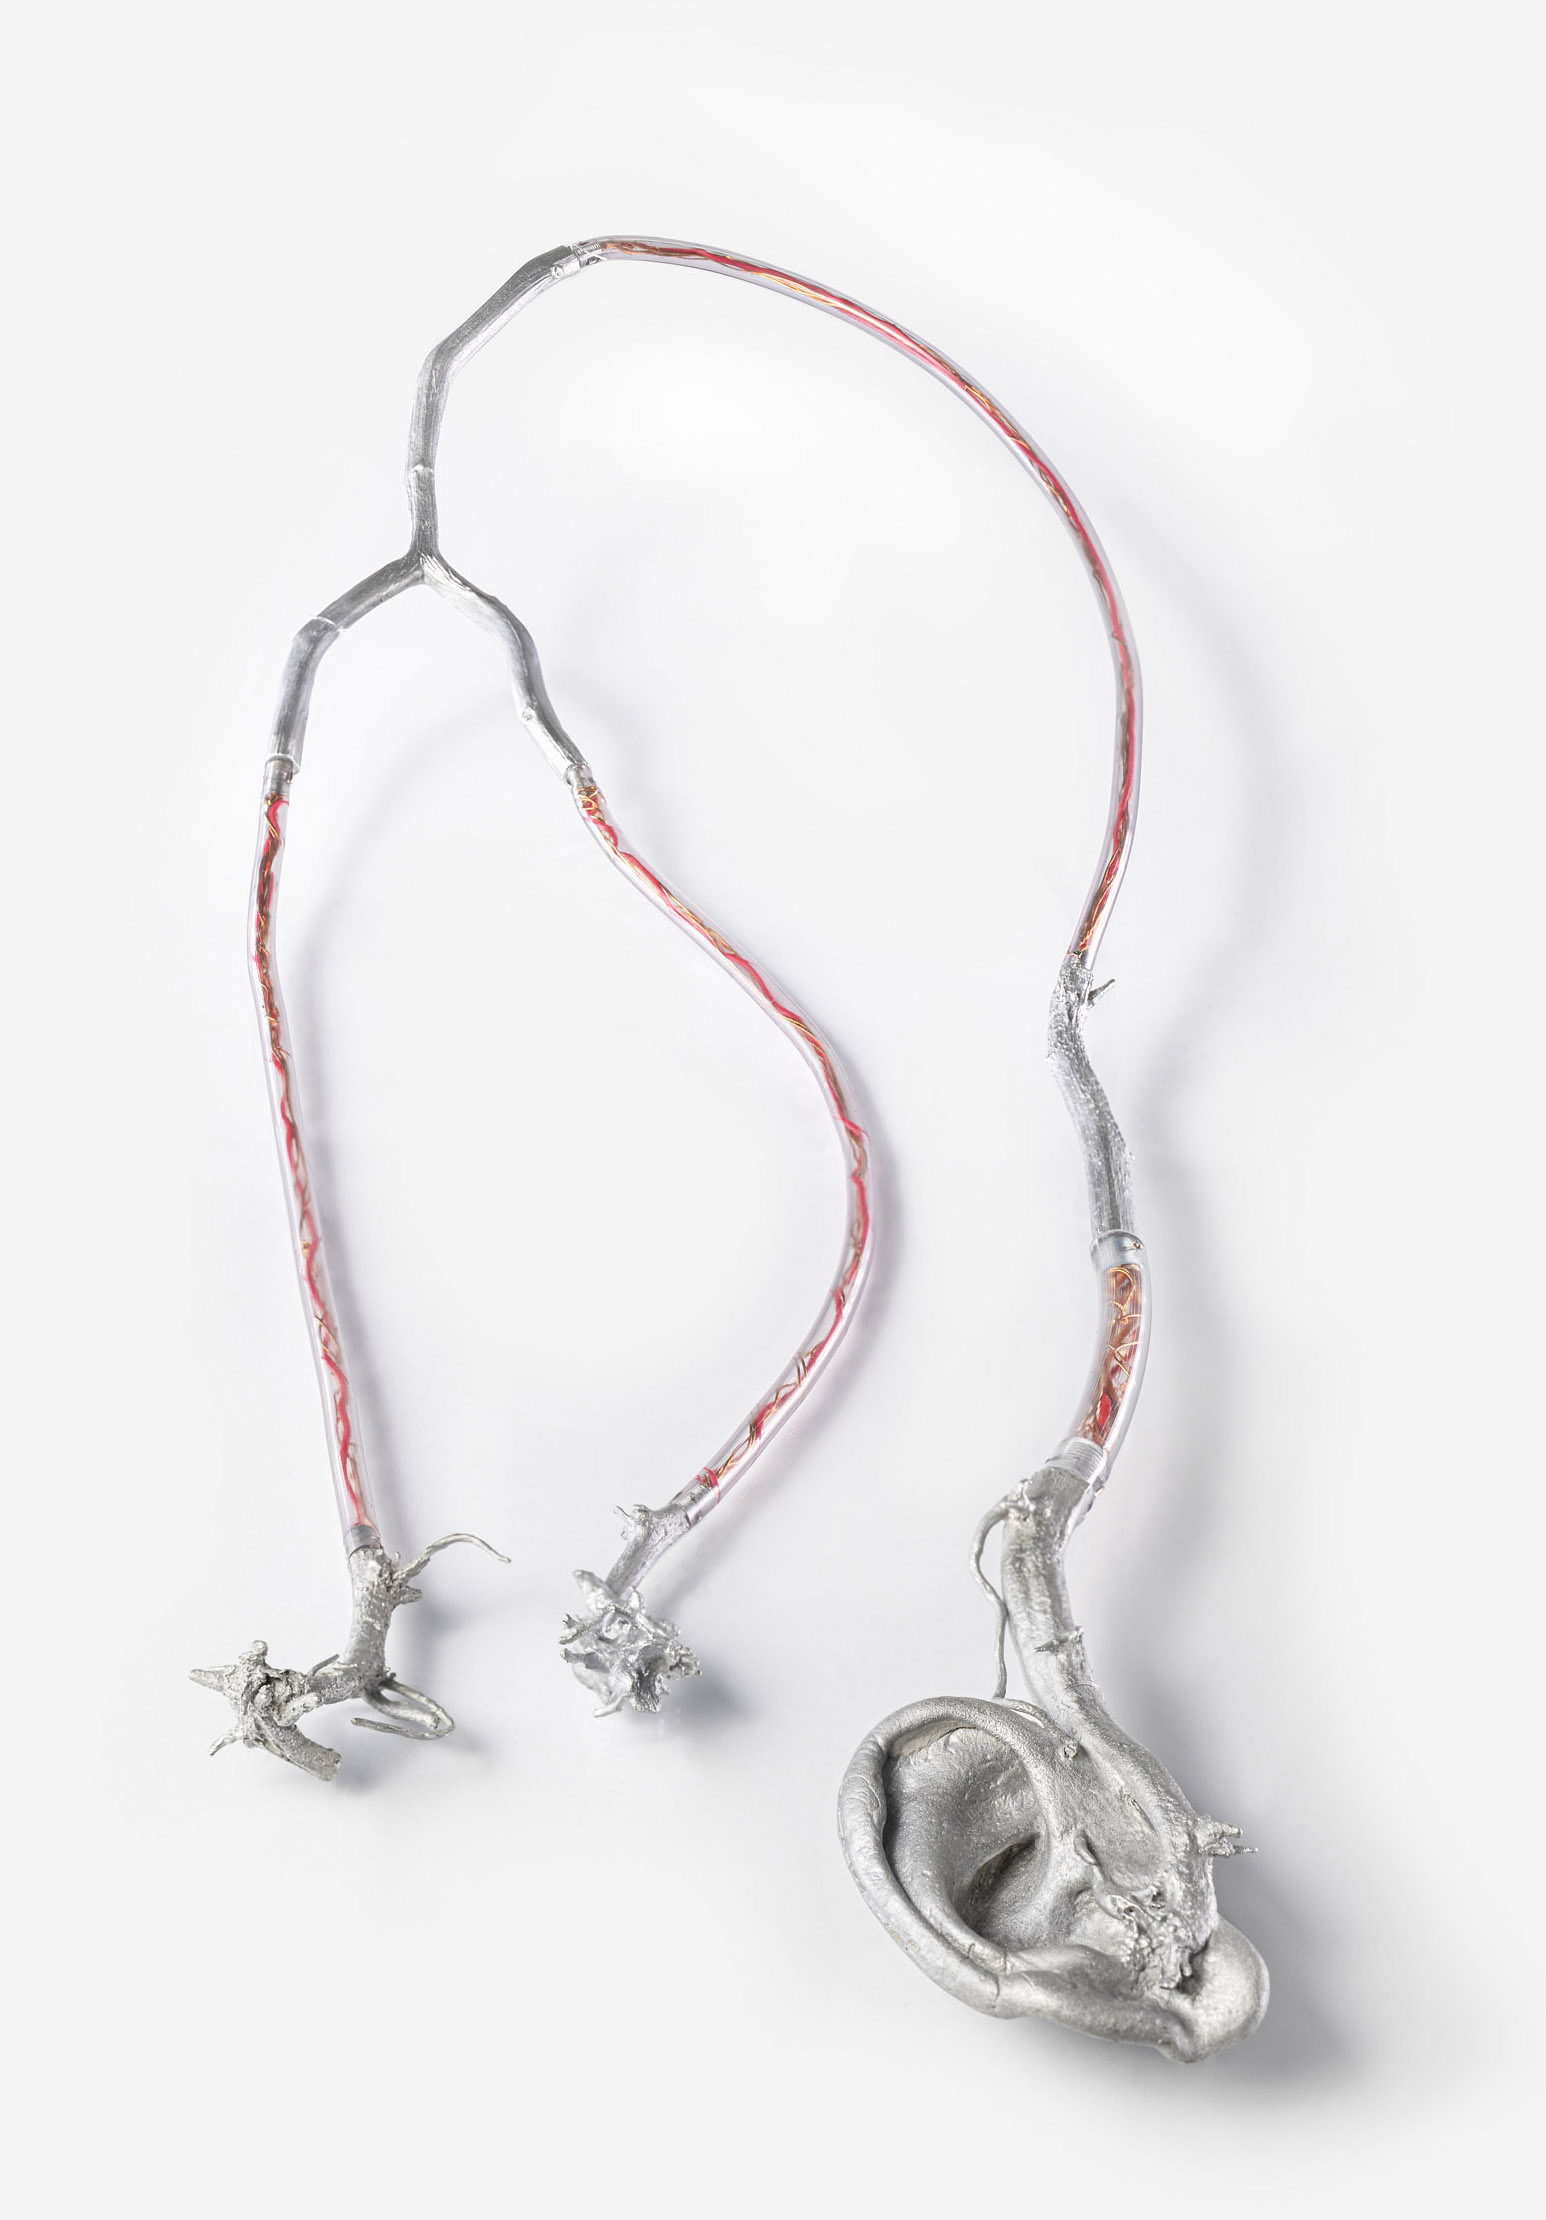 Stethoscope - Iris Merkle Contemporary Jewelry